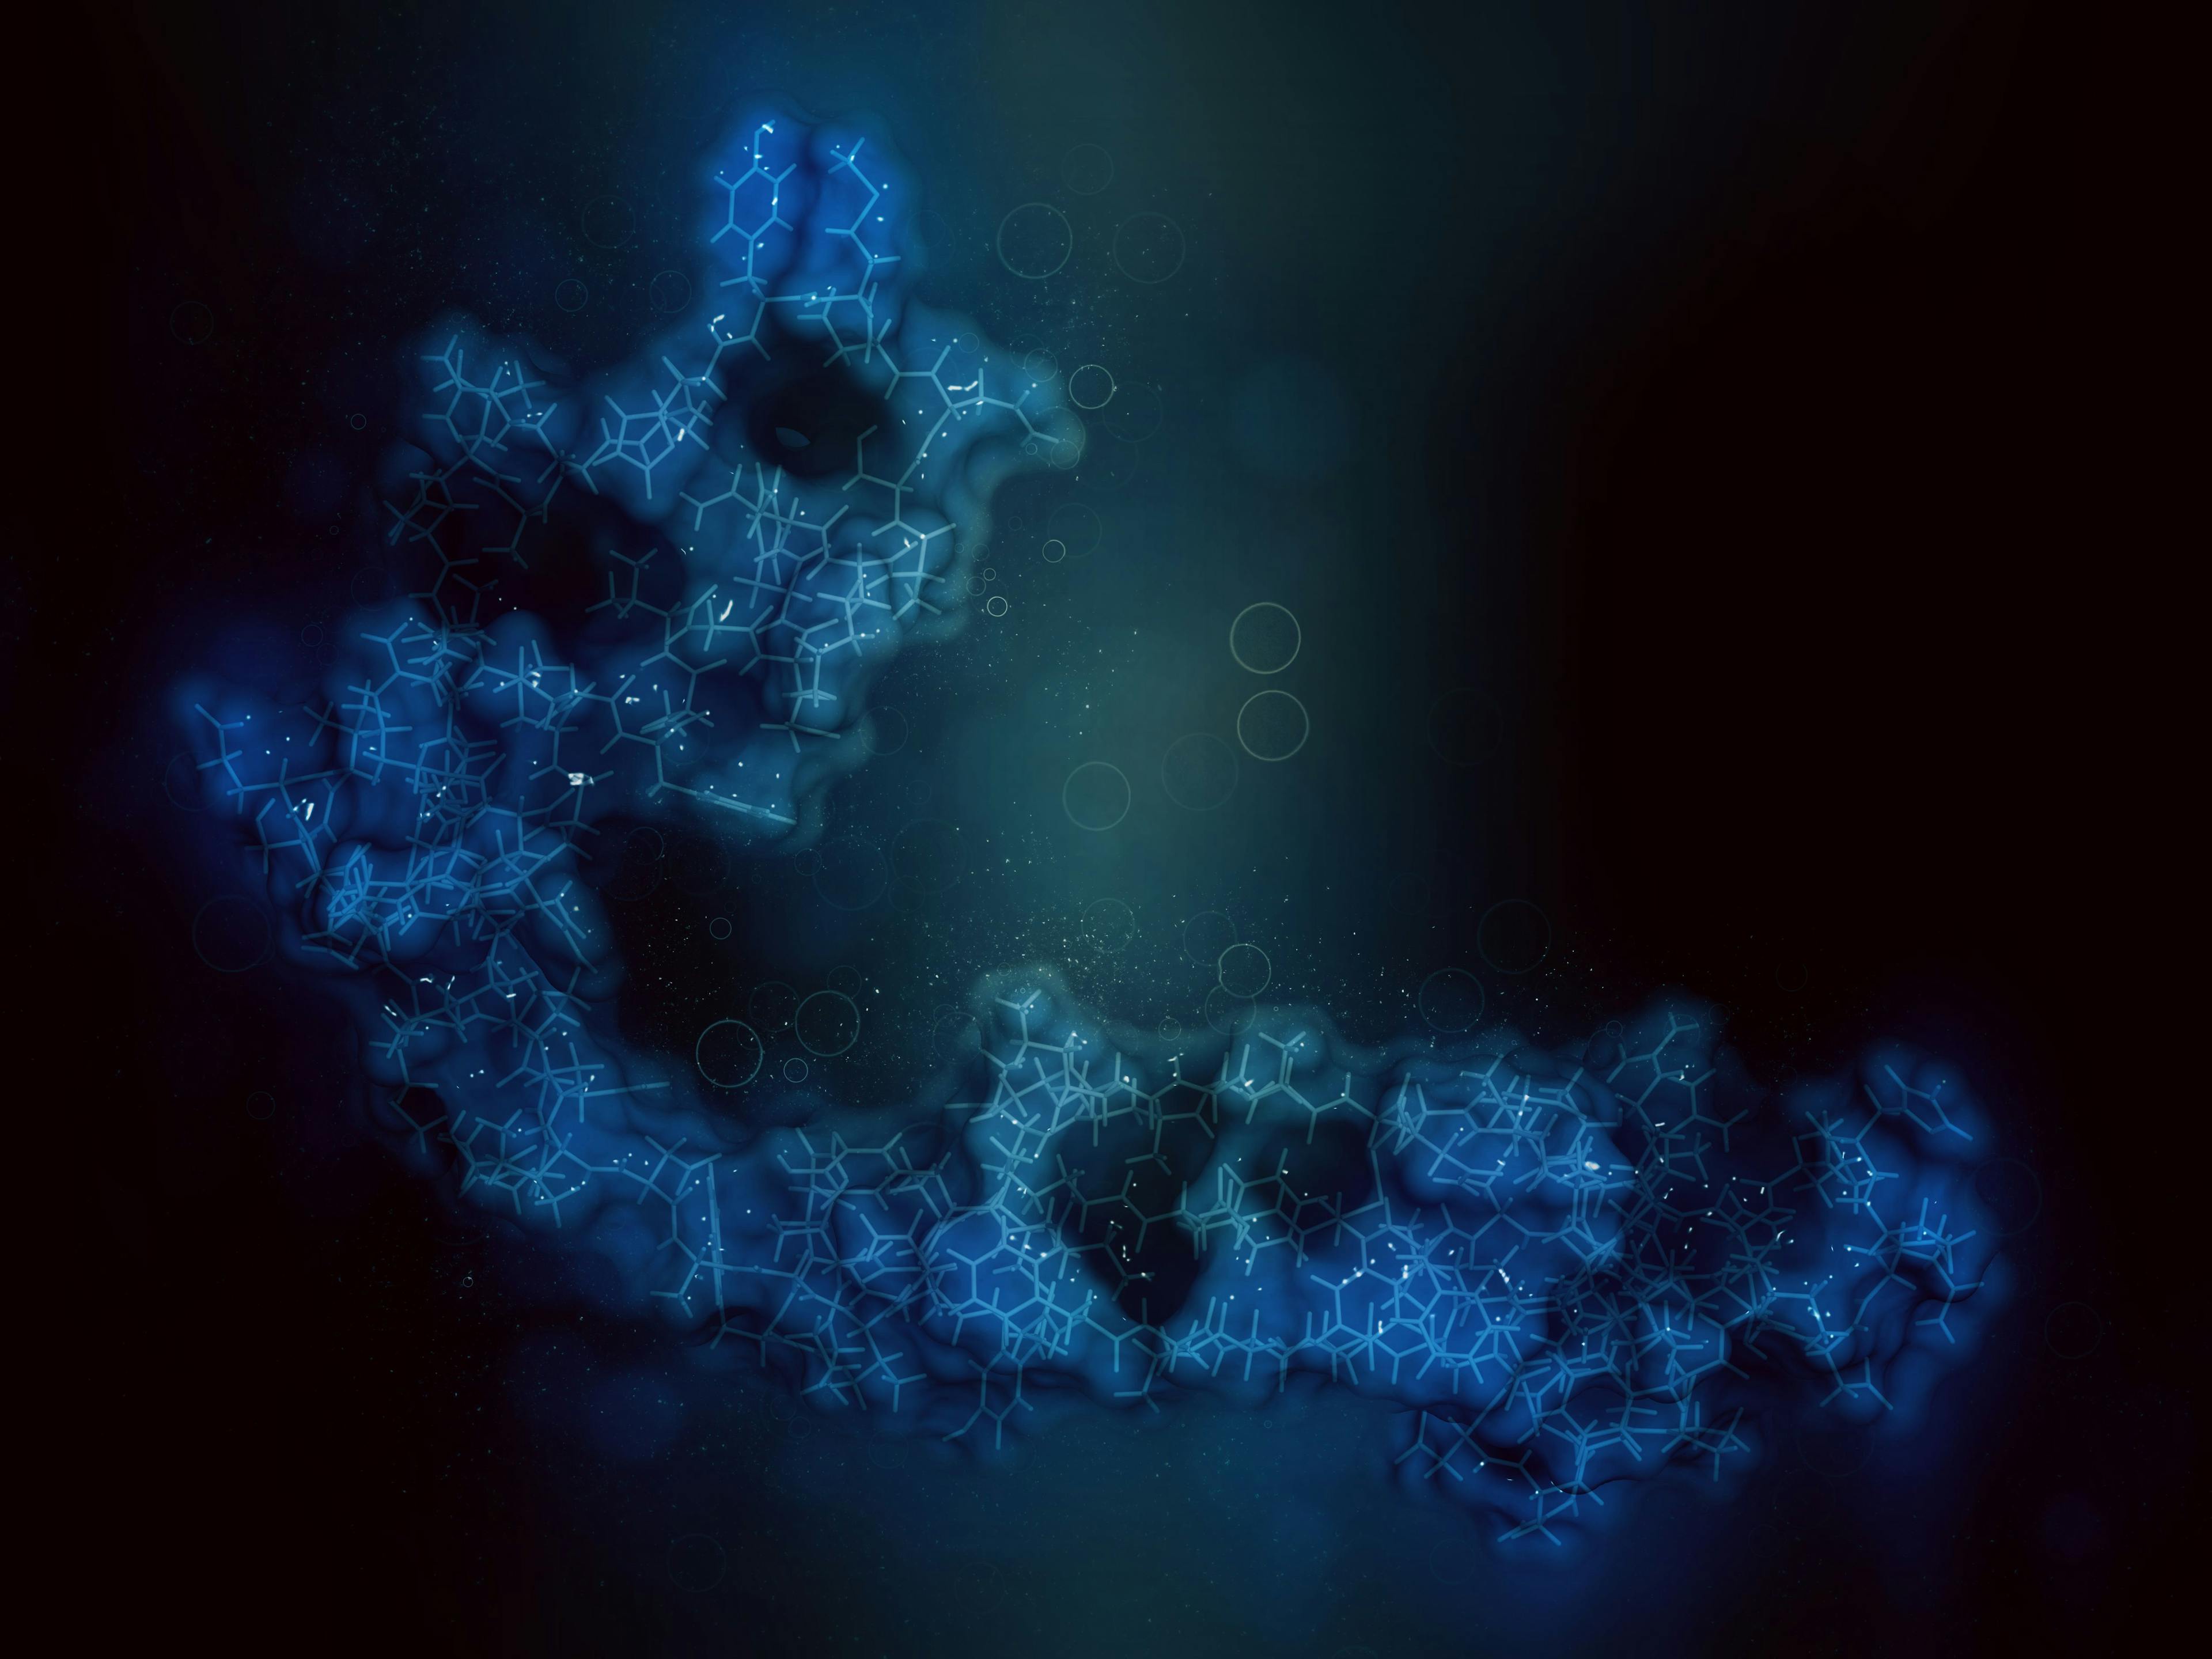 Biomarker Concept | image credit: molekuul.be - stock.adobe.com